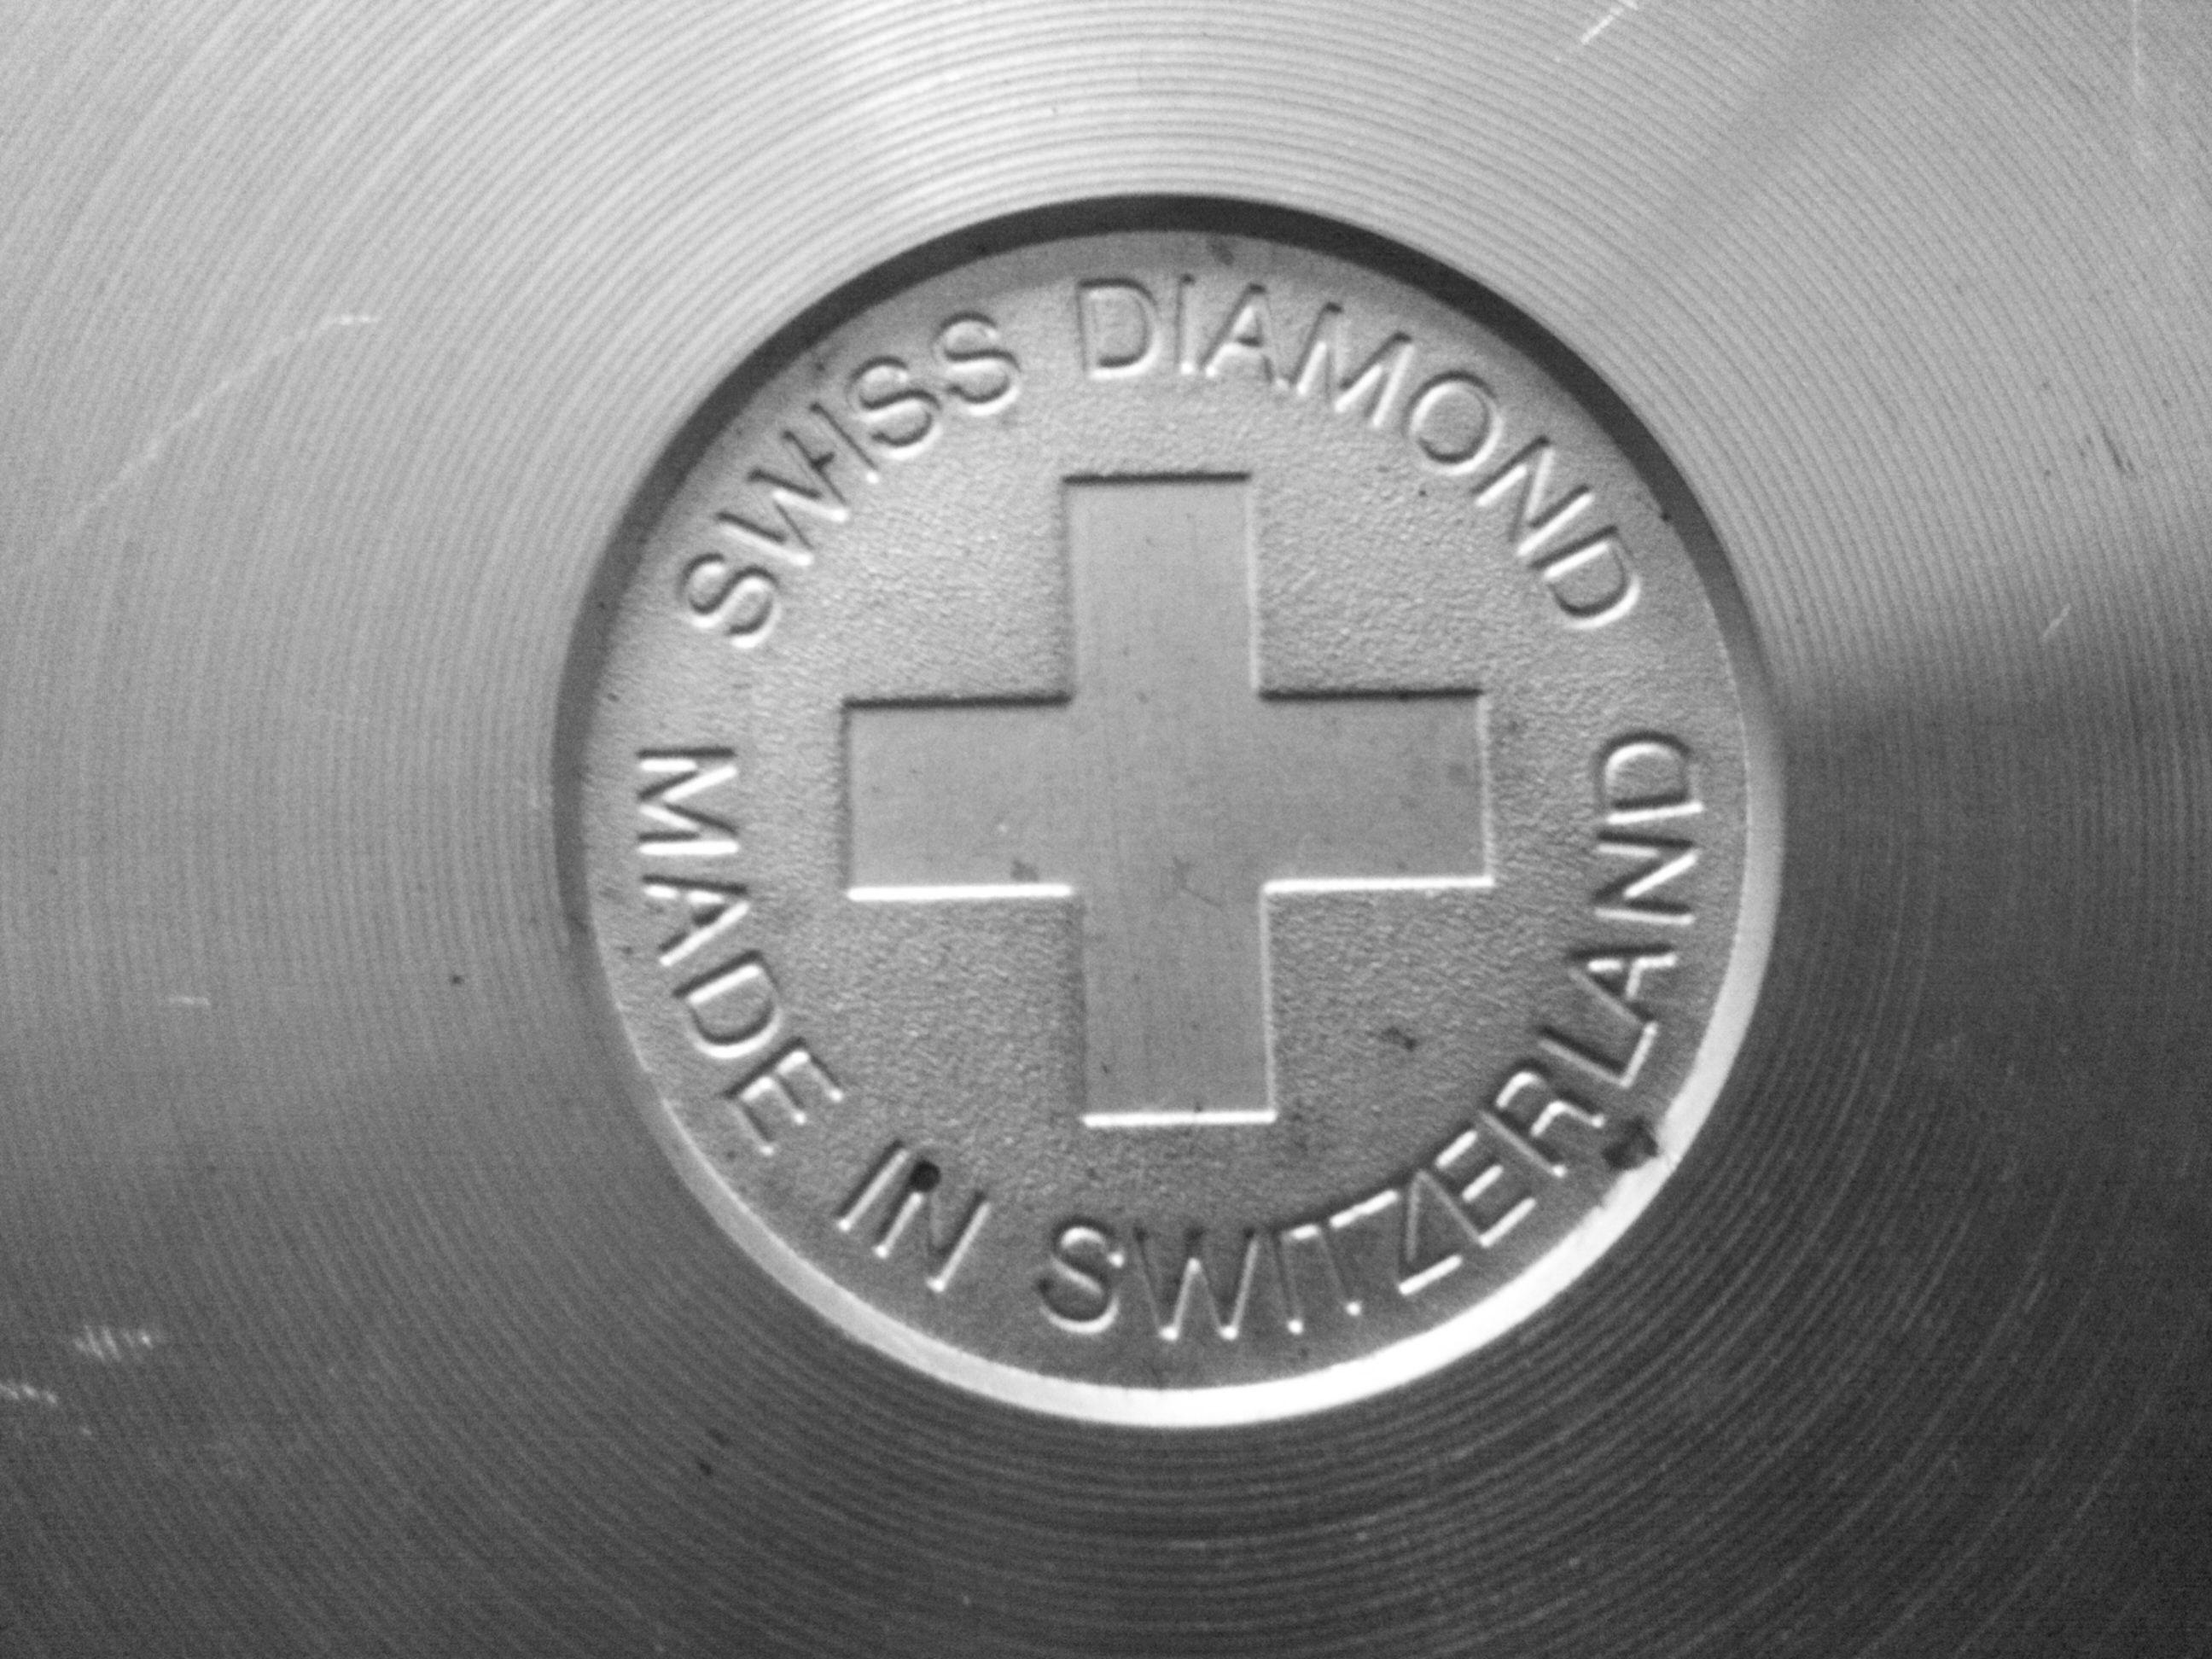 Swiss Diamond Logo - Swiss Diamond frying pan review - Love Low FatLove Low Fat